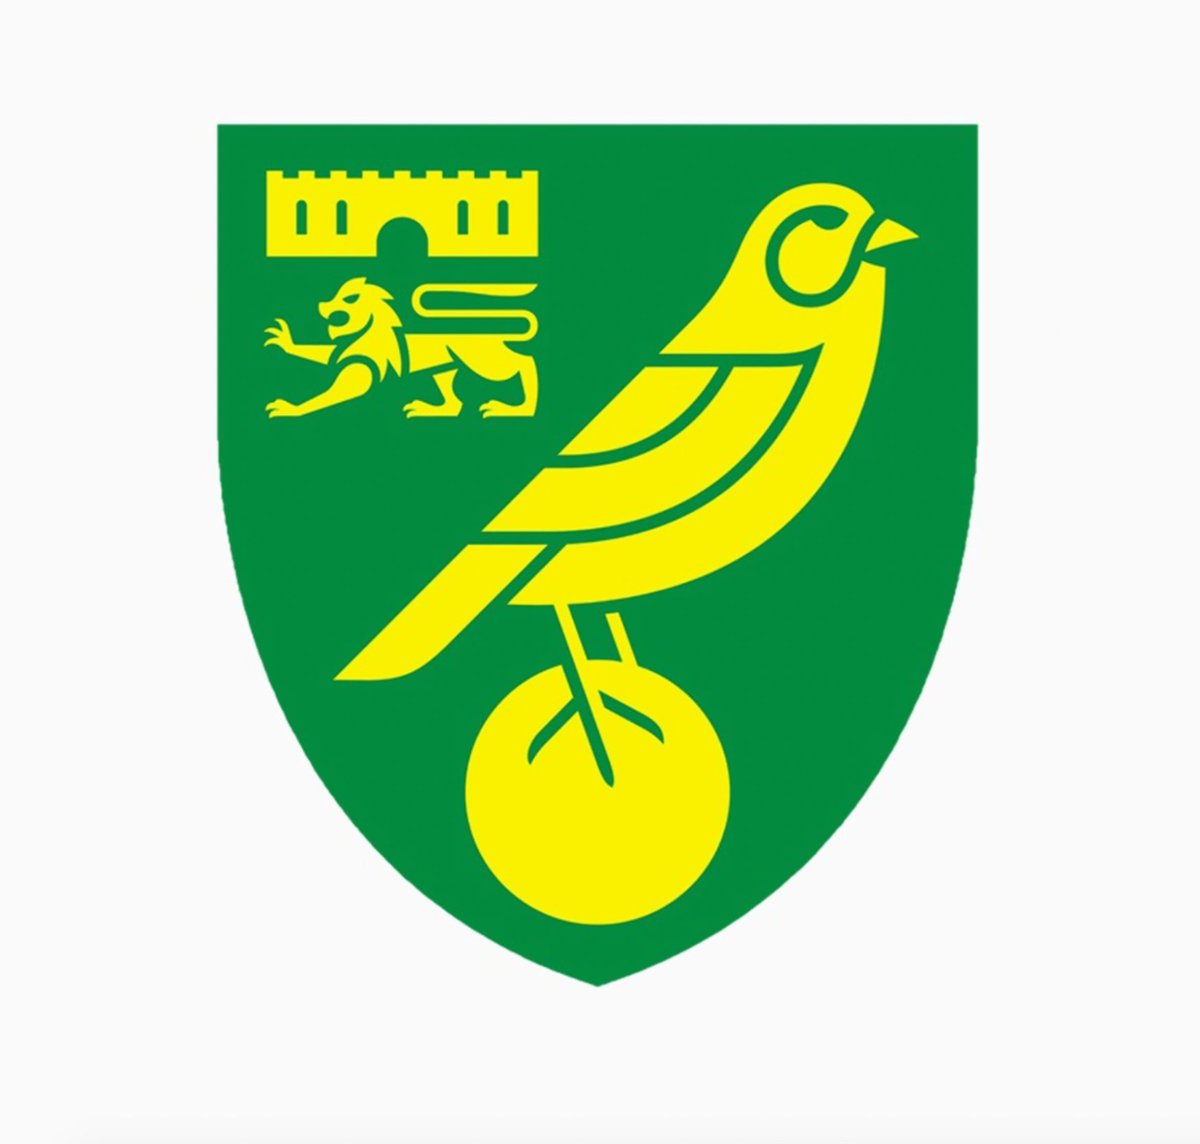 Retro retakes for Norwich City F.C. #norwichcity #norwich #ncfc #football #canaries #norwichlife #norfolk #norwichcityfc #epl #soccer #yellows #carrowroad #efl  #norwichbloggers #championship #norwichnorfolk